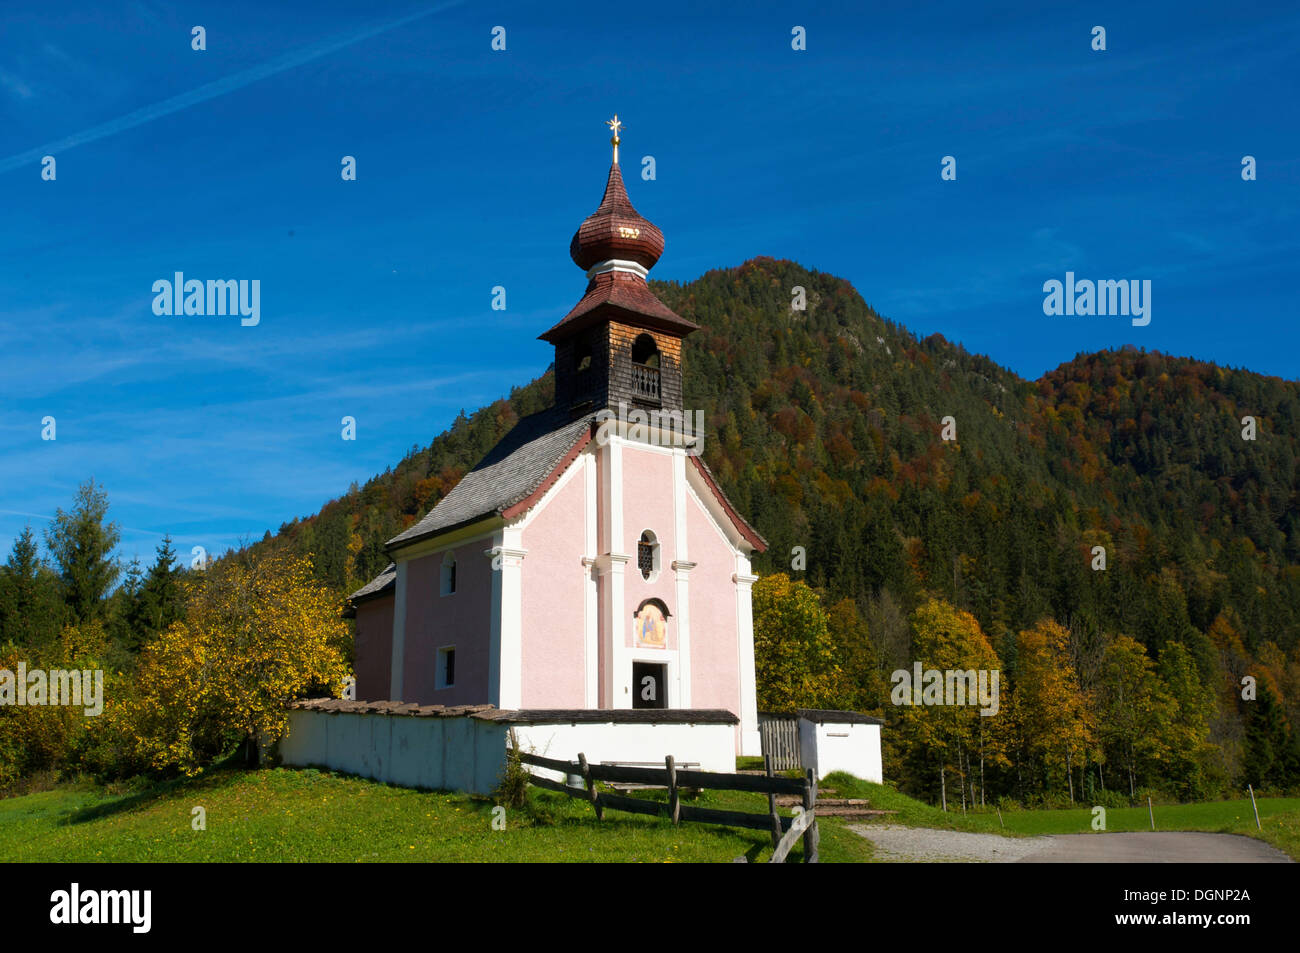 Antoni Chapel in Au near Lofer, Pinzgau region in Salzburger Land, Austria, Europe Stock Photo